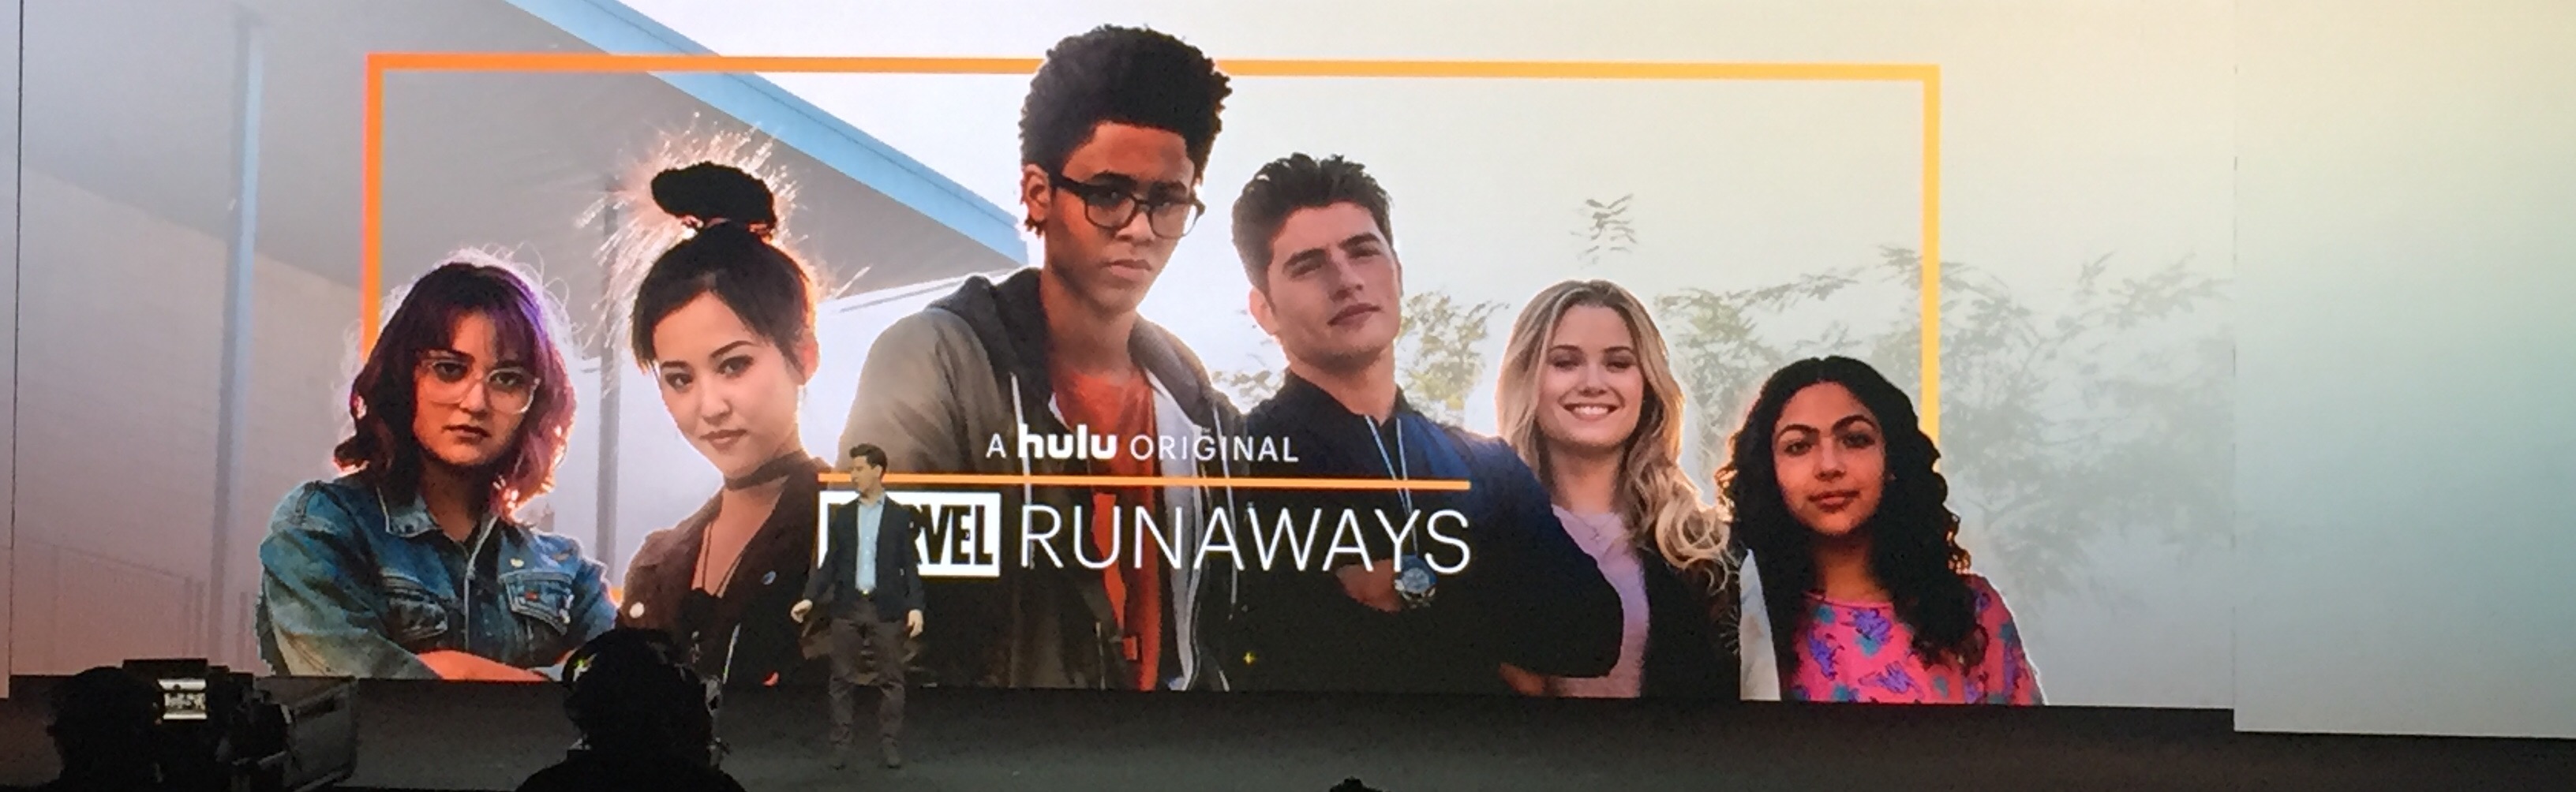 Hulu's Runaways from Marvel